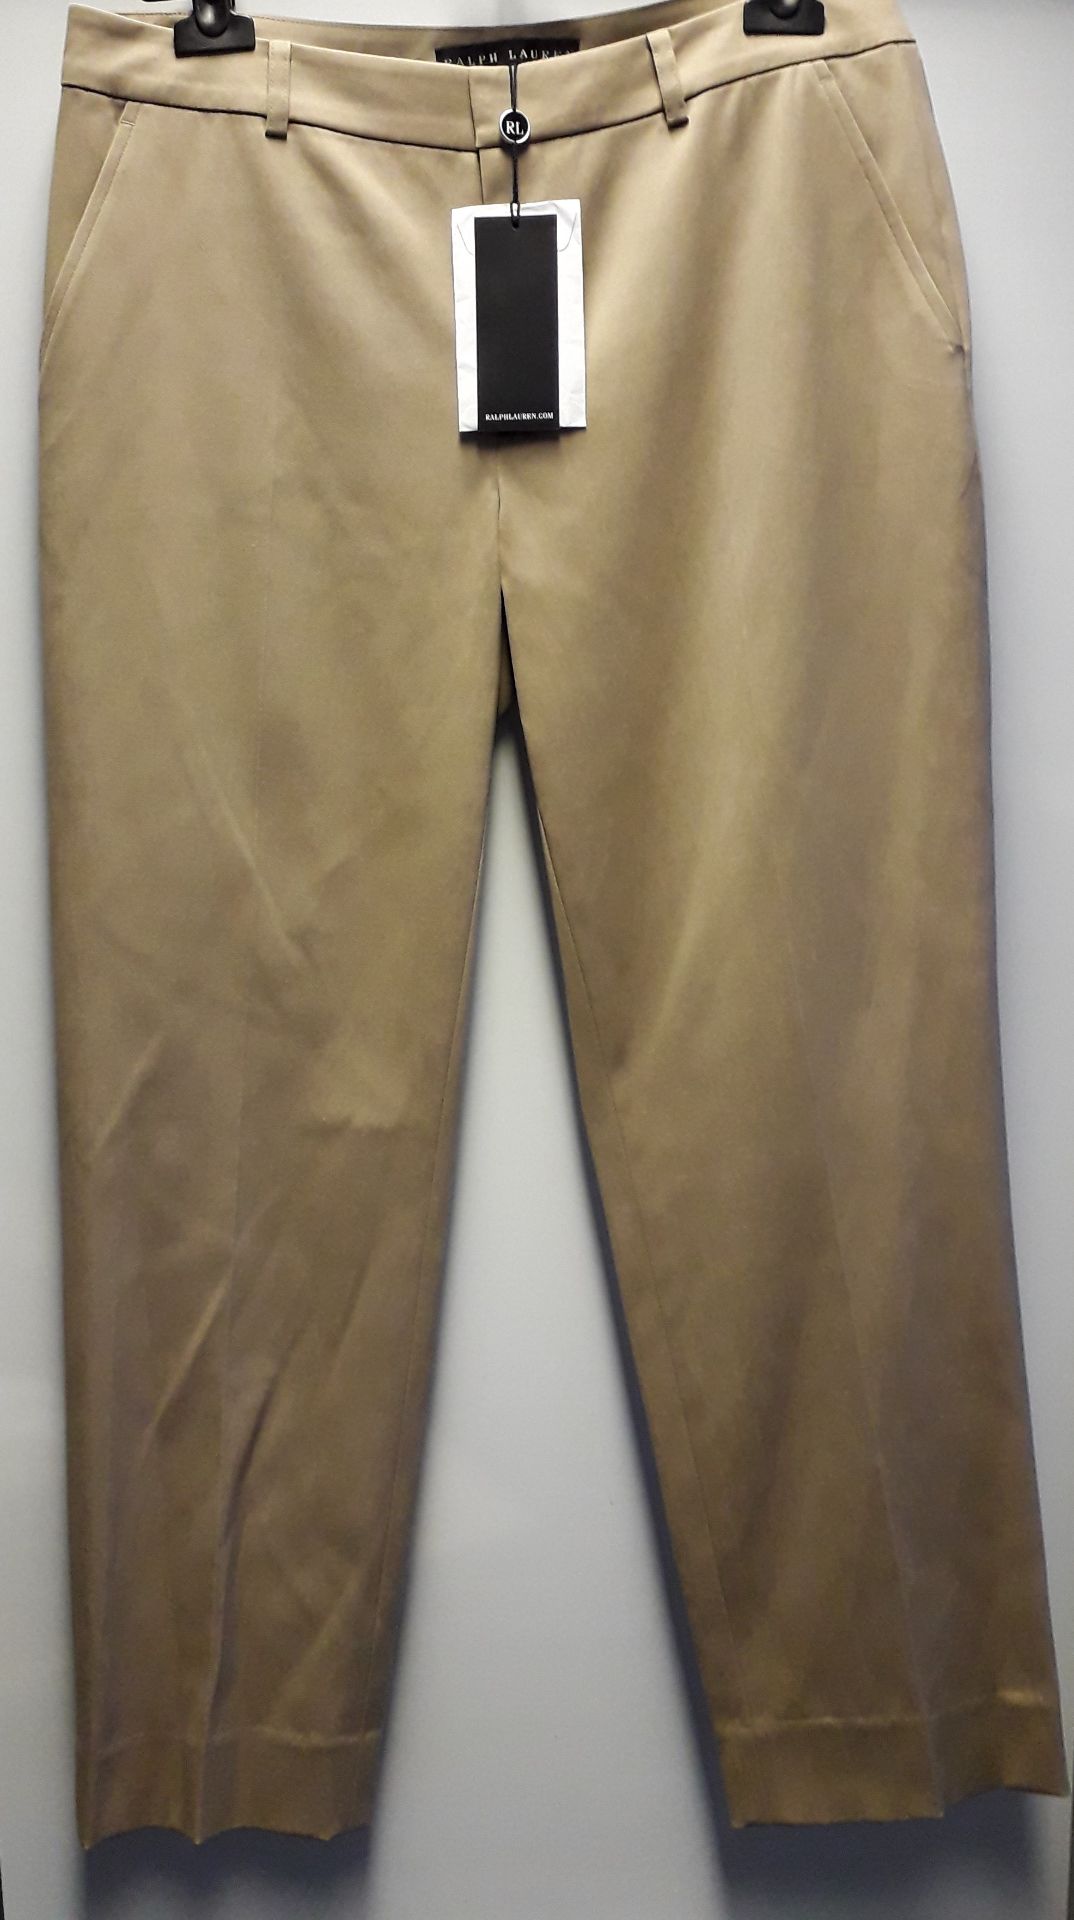 1 x Ralph Lauren Beige Heidi Trousers - Size: 16 - Material: 58% Wool, 40% Cotton, 2% Elastane -